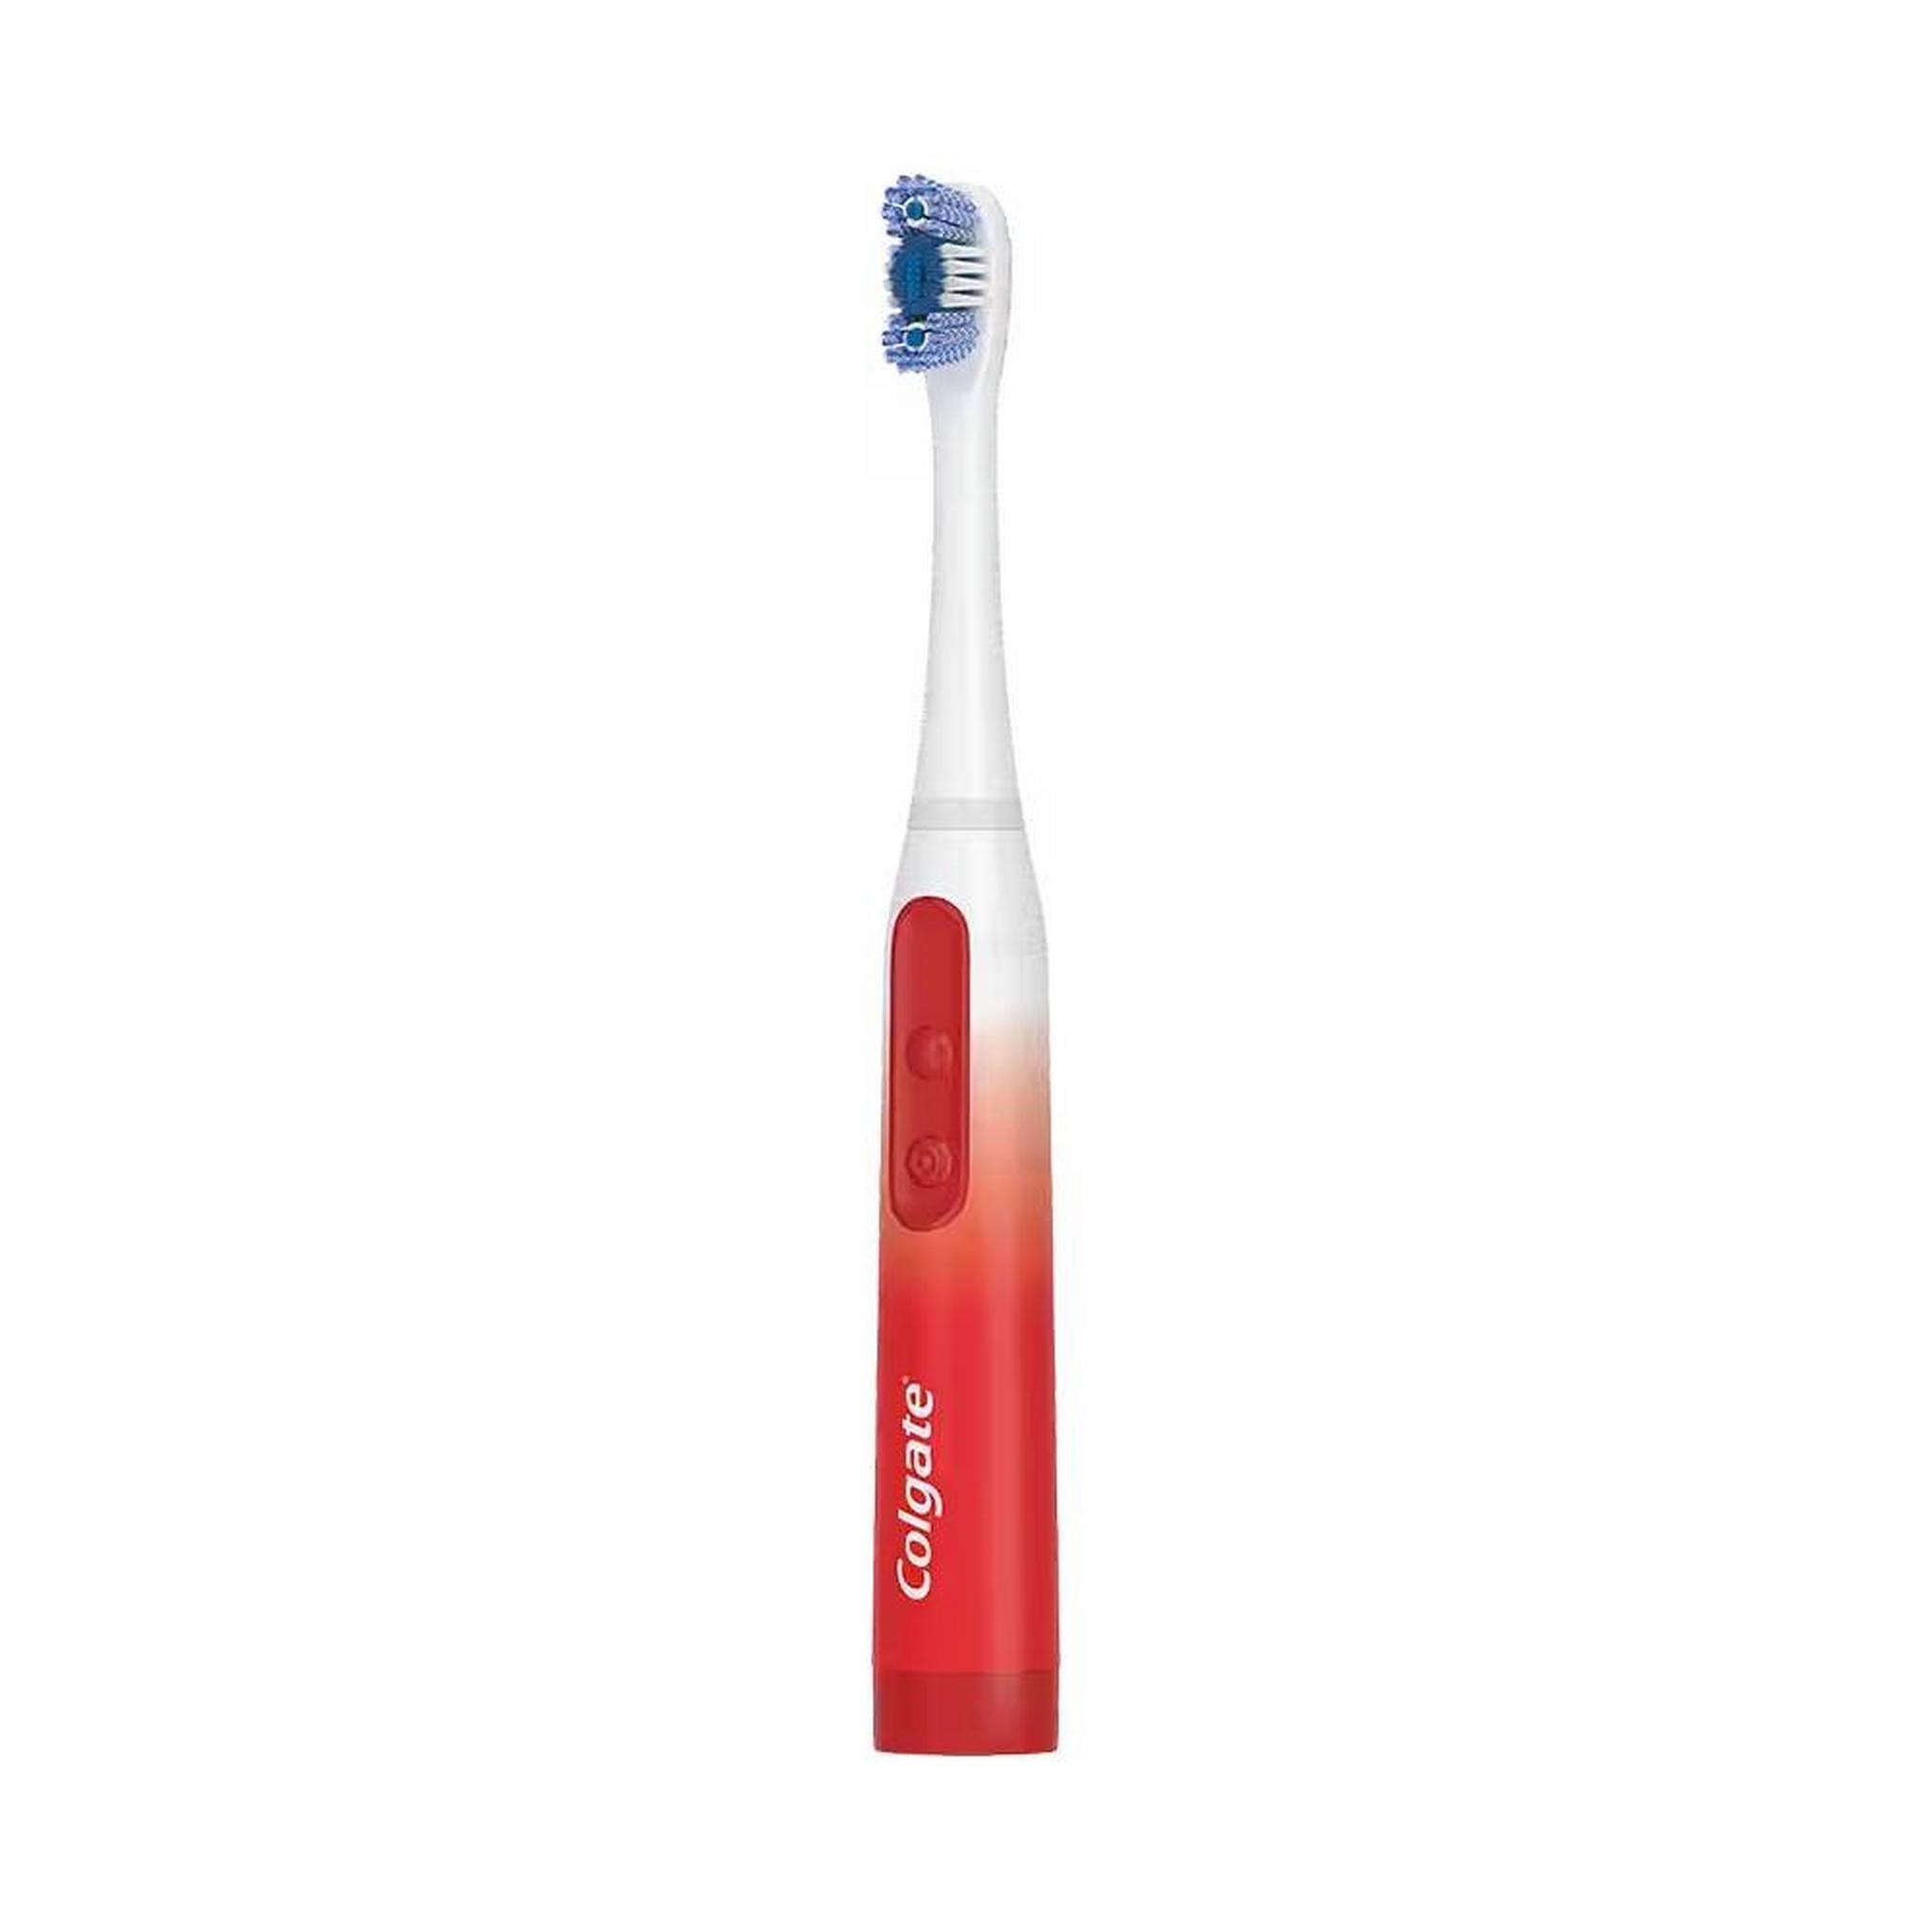 Colgate 360 Optic White Battery Toothbrush